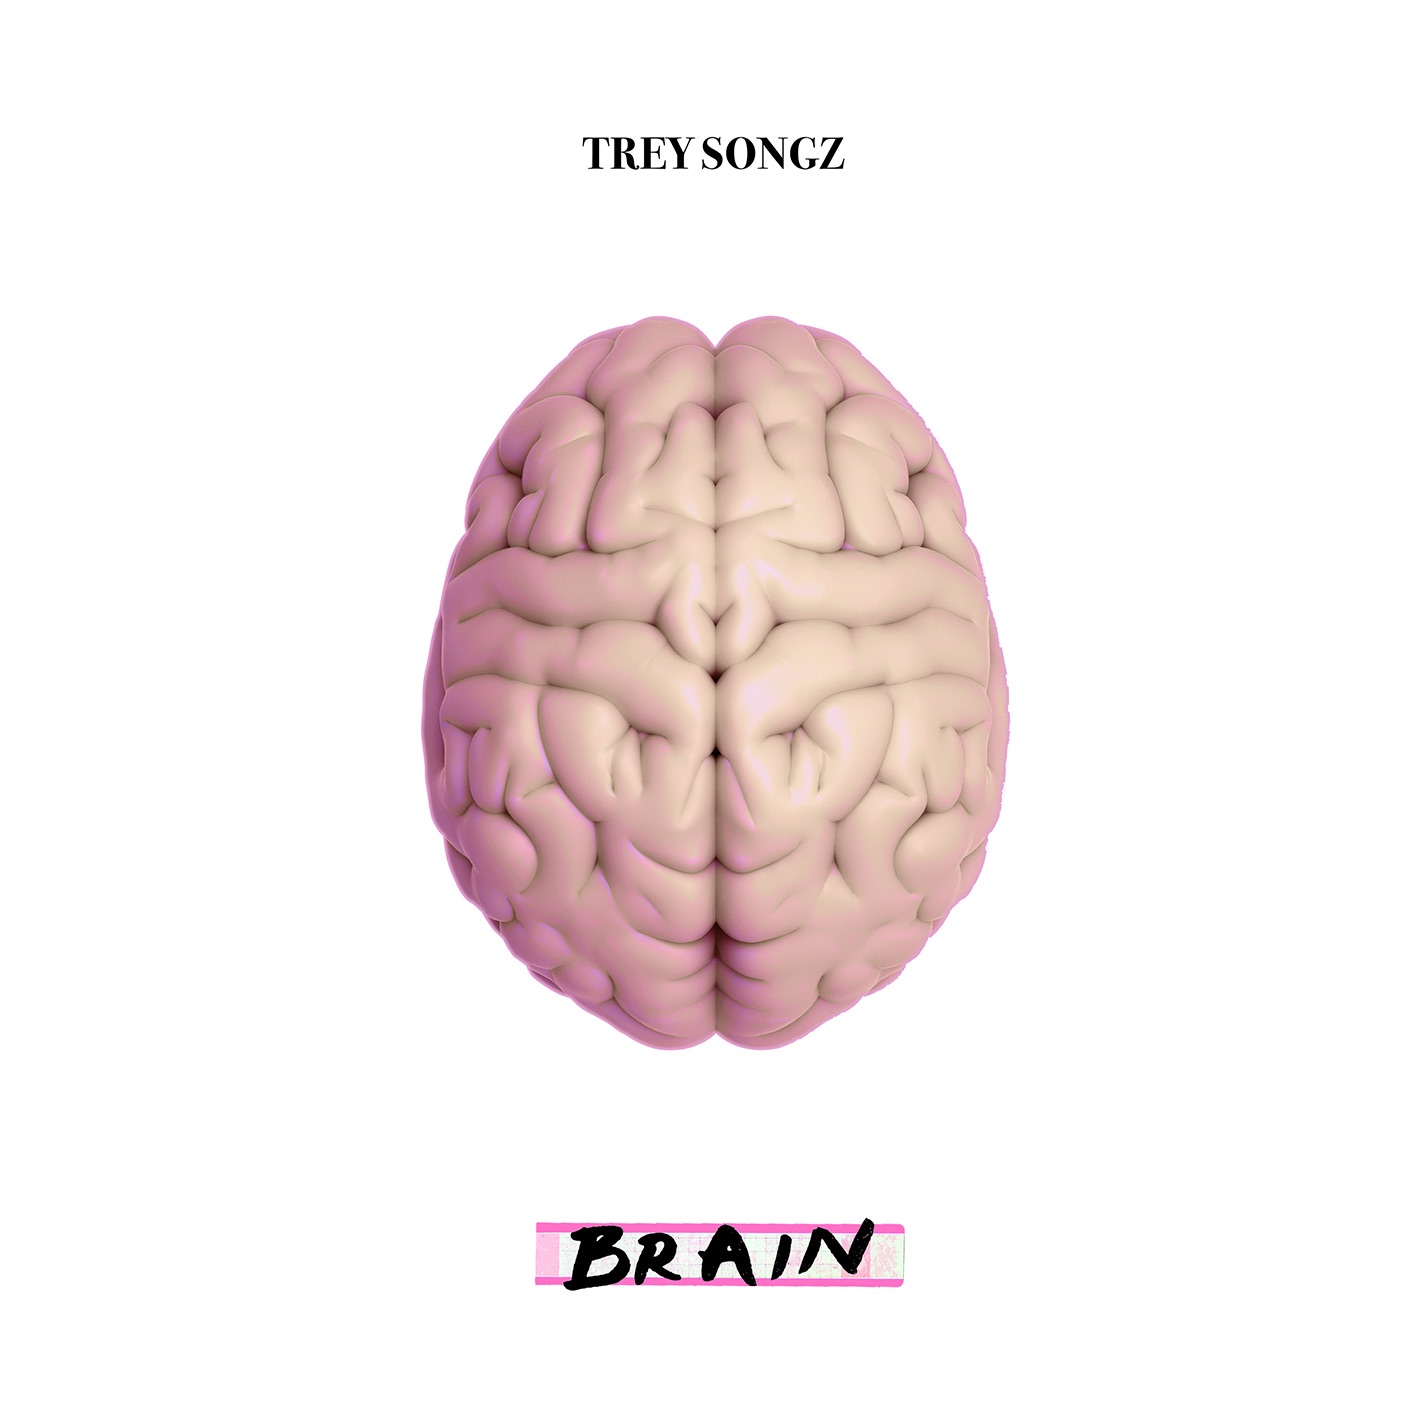 Trey Songz - Brain - Single